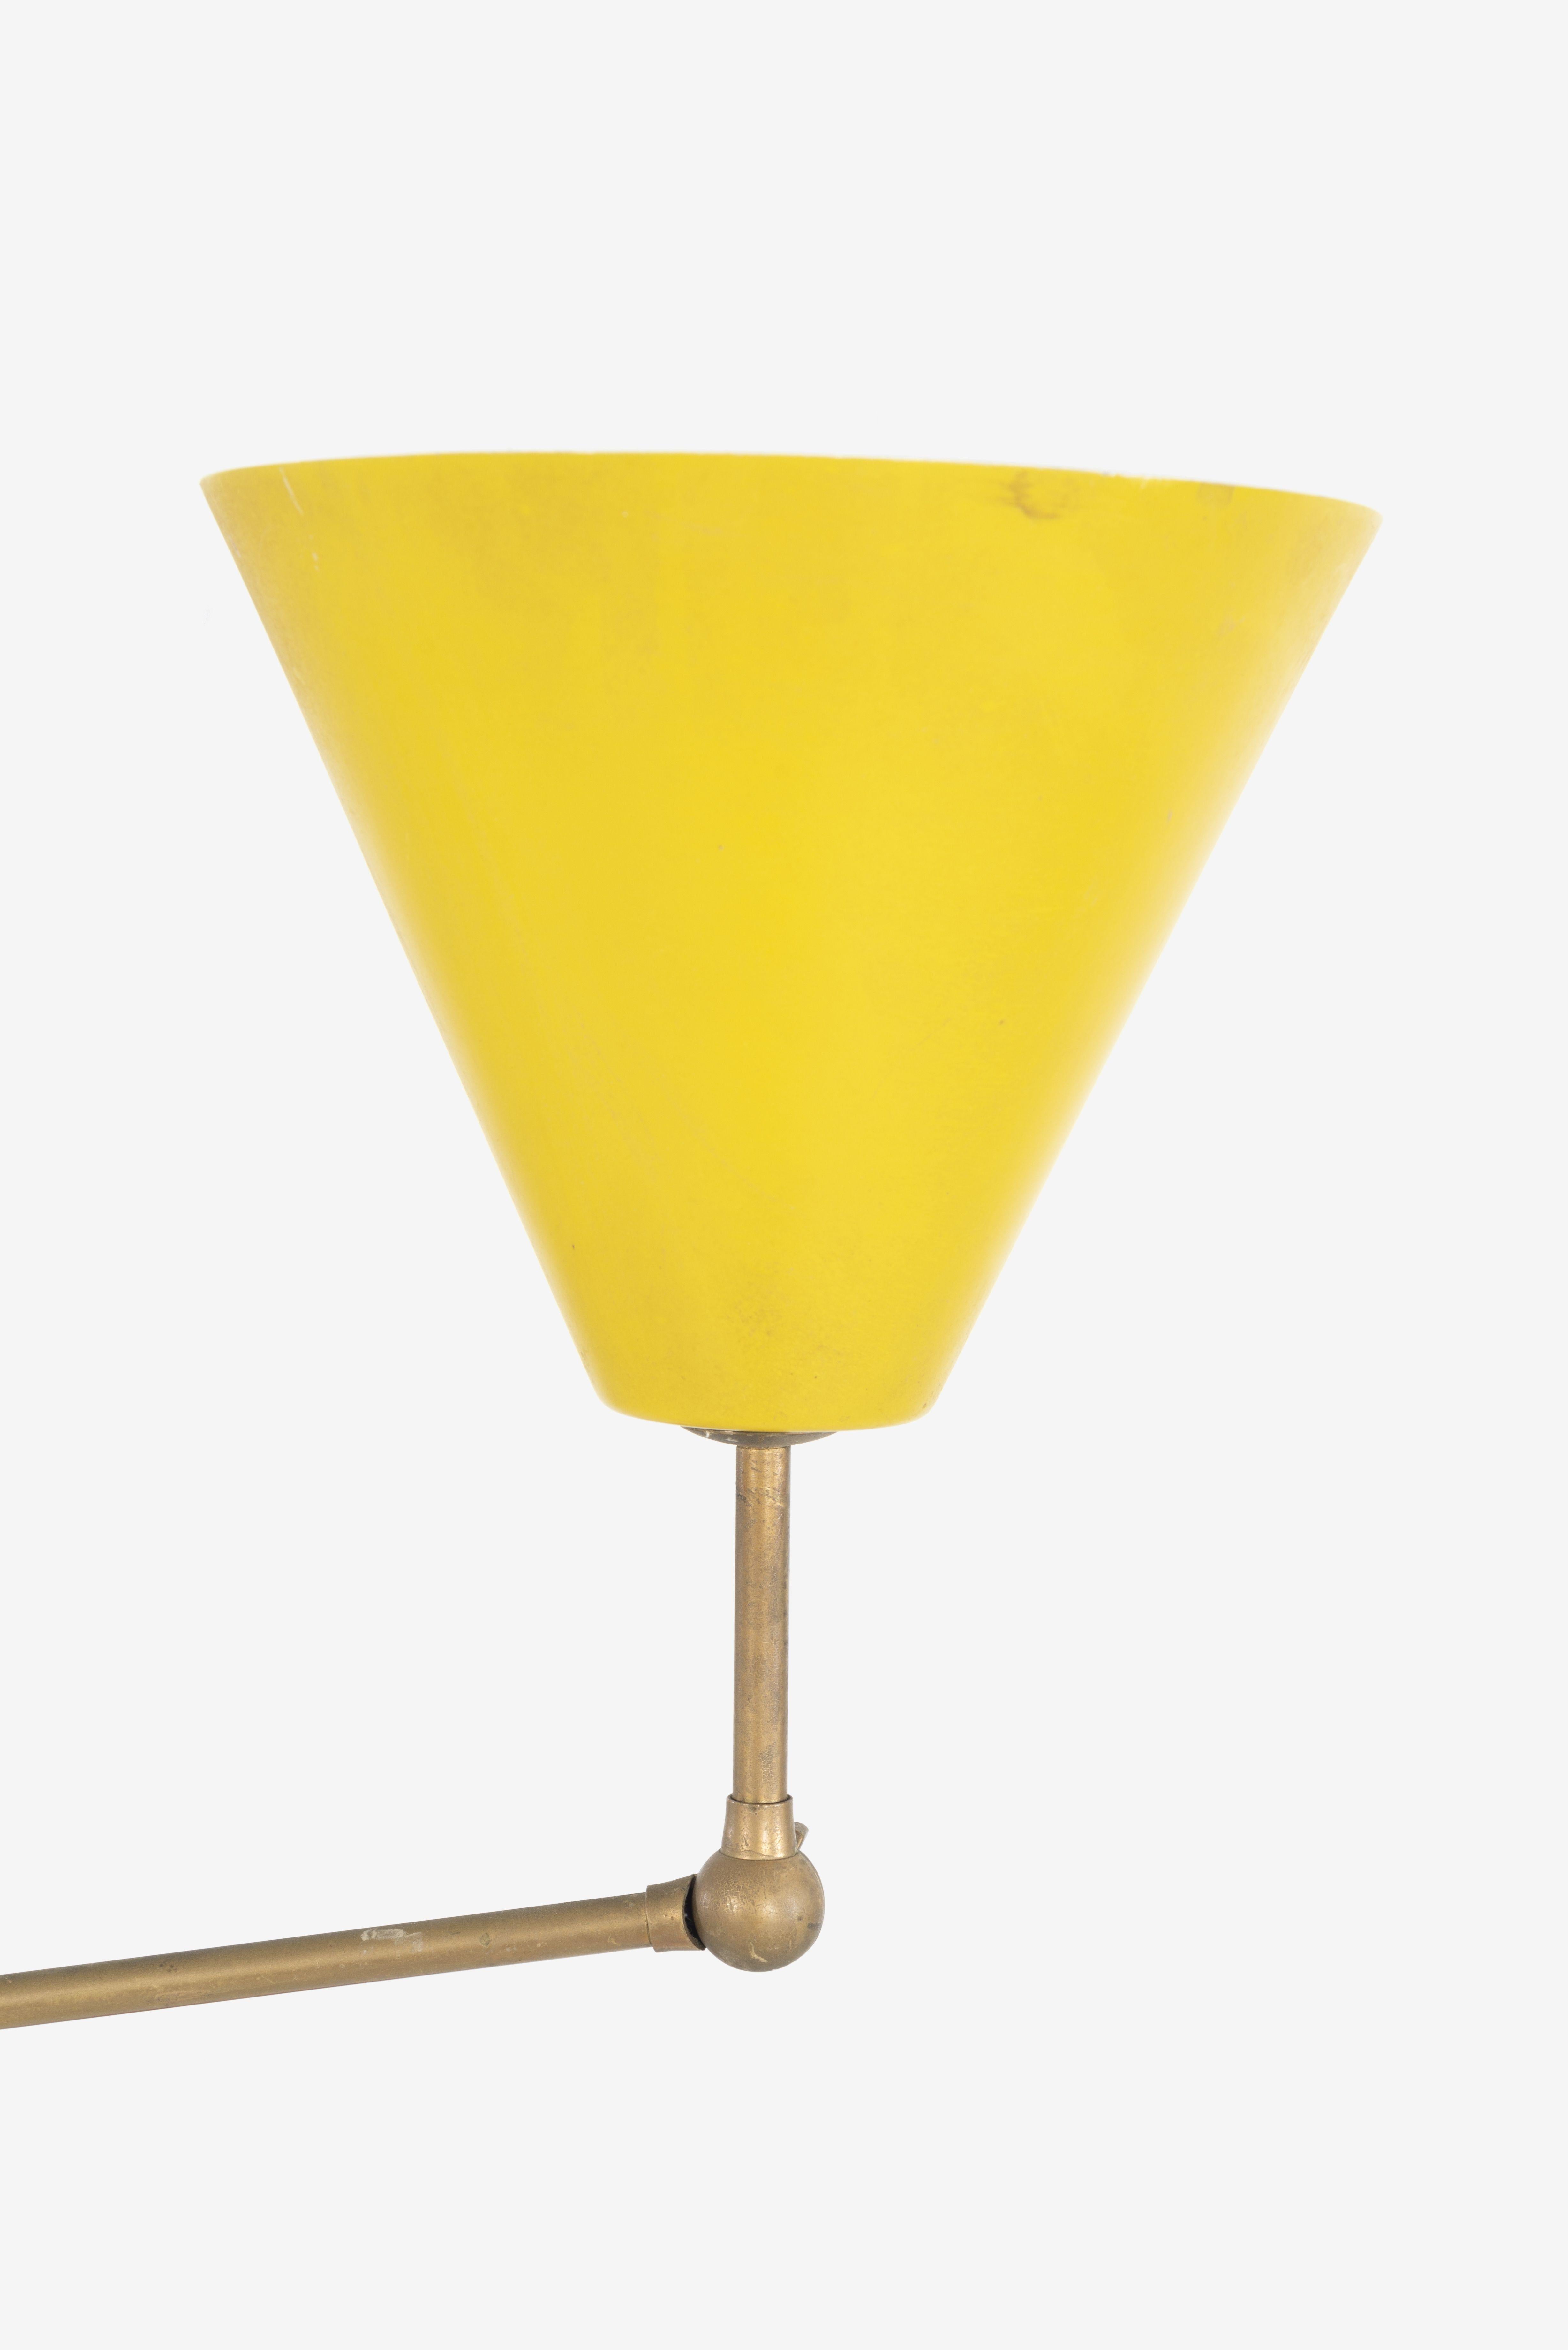 Angelo Lelii for Arredoluce, Triennale Floor Lamp, Model 12128 5